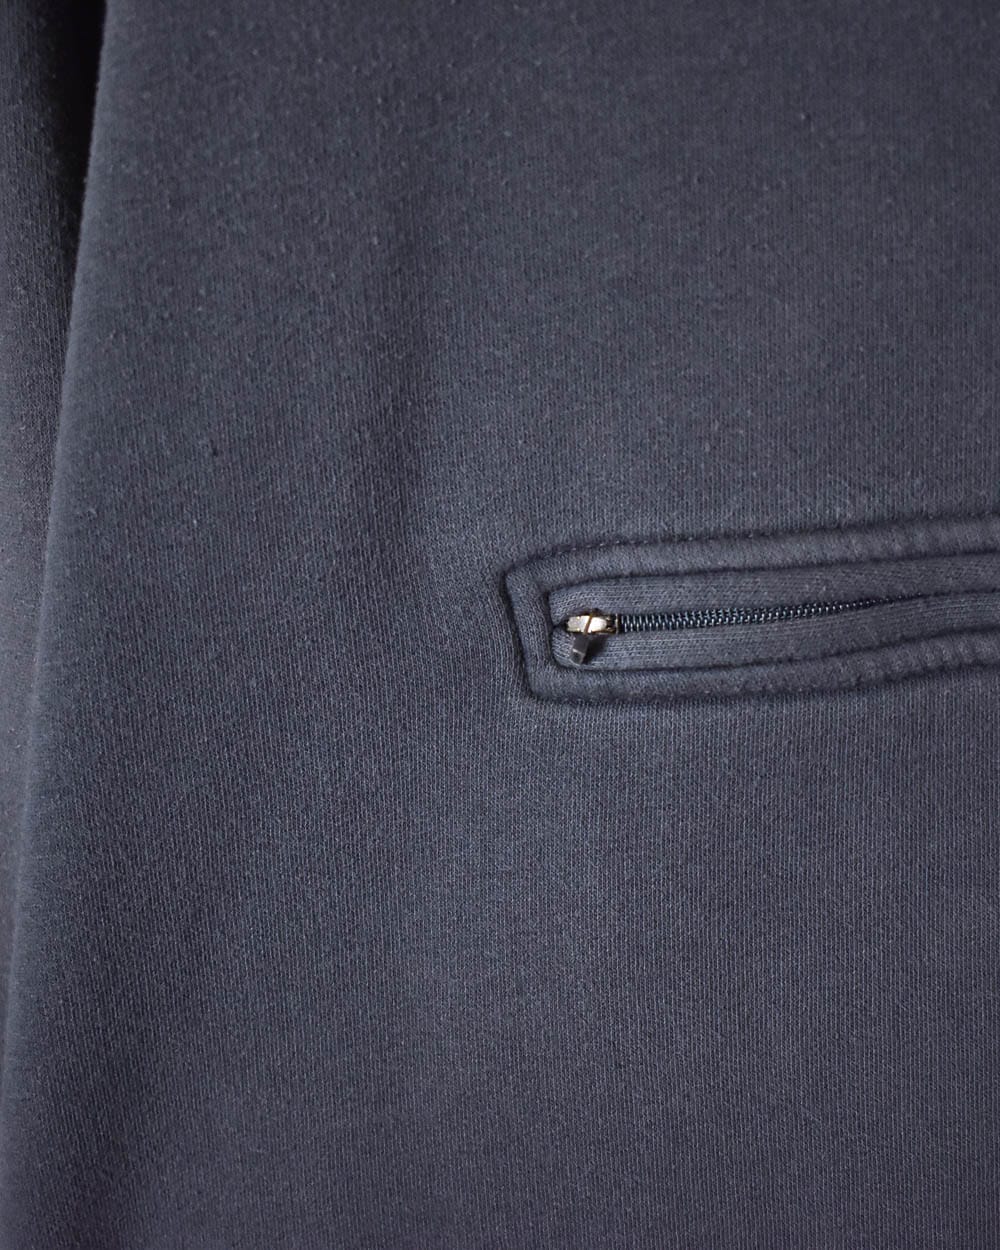 Navy Adidas Kangaroo Pocket 1/4 Zip Sweatshirt - XX-Large